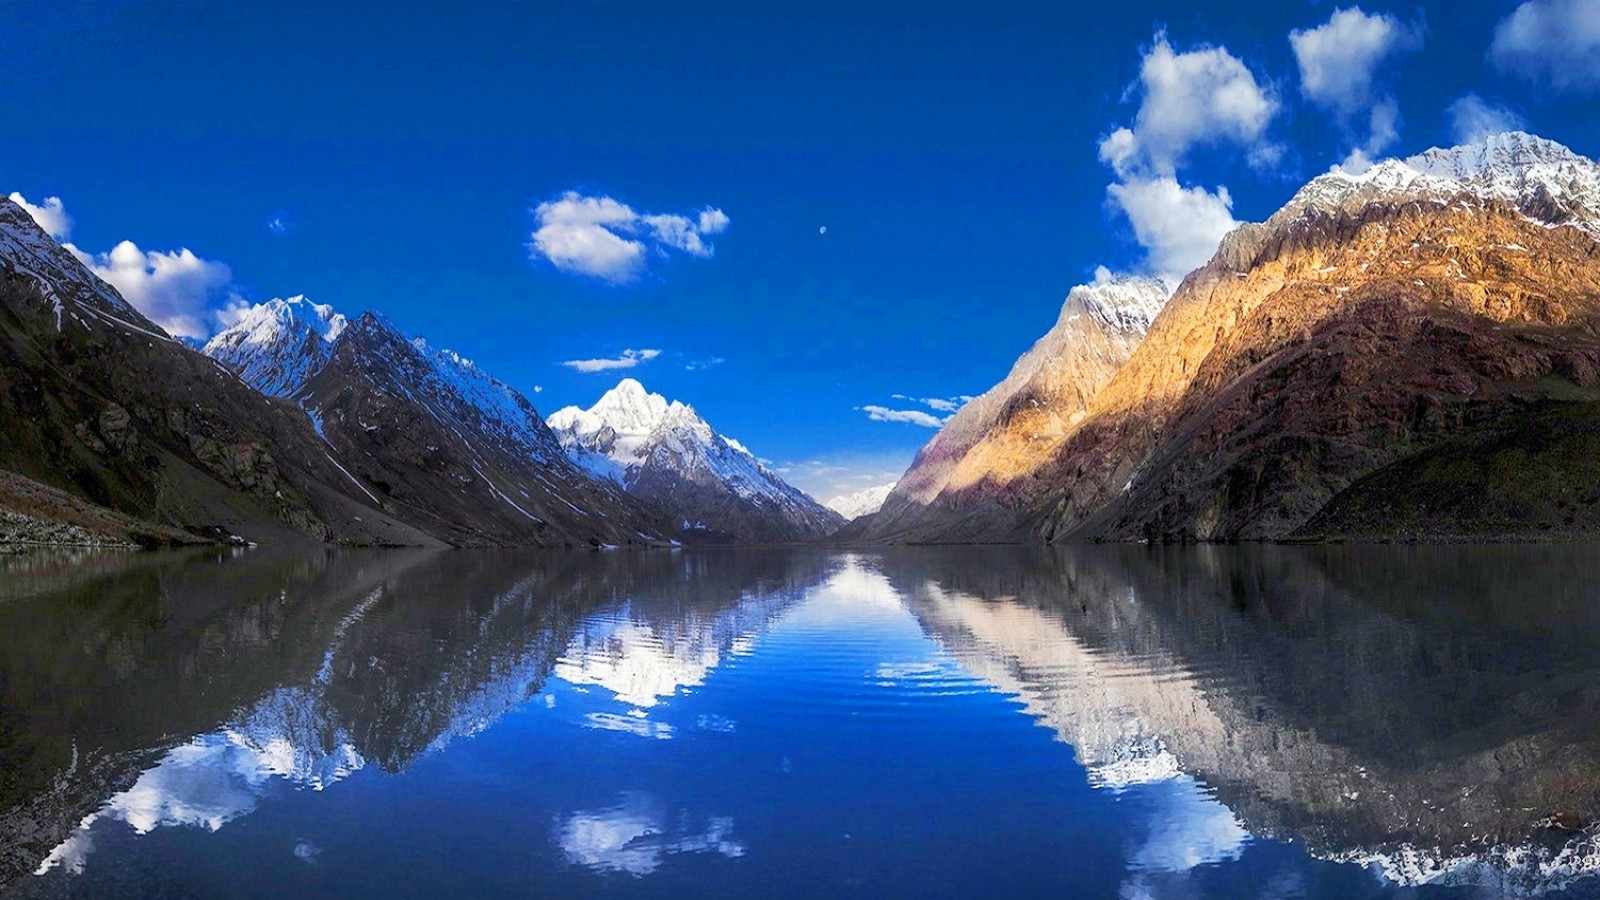 General 1600x900 nature landscape mountains lake reflection snowy peak clouds water blue white Pakistan